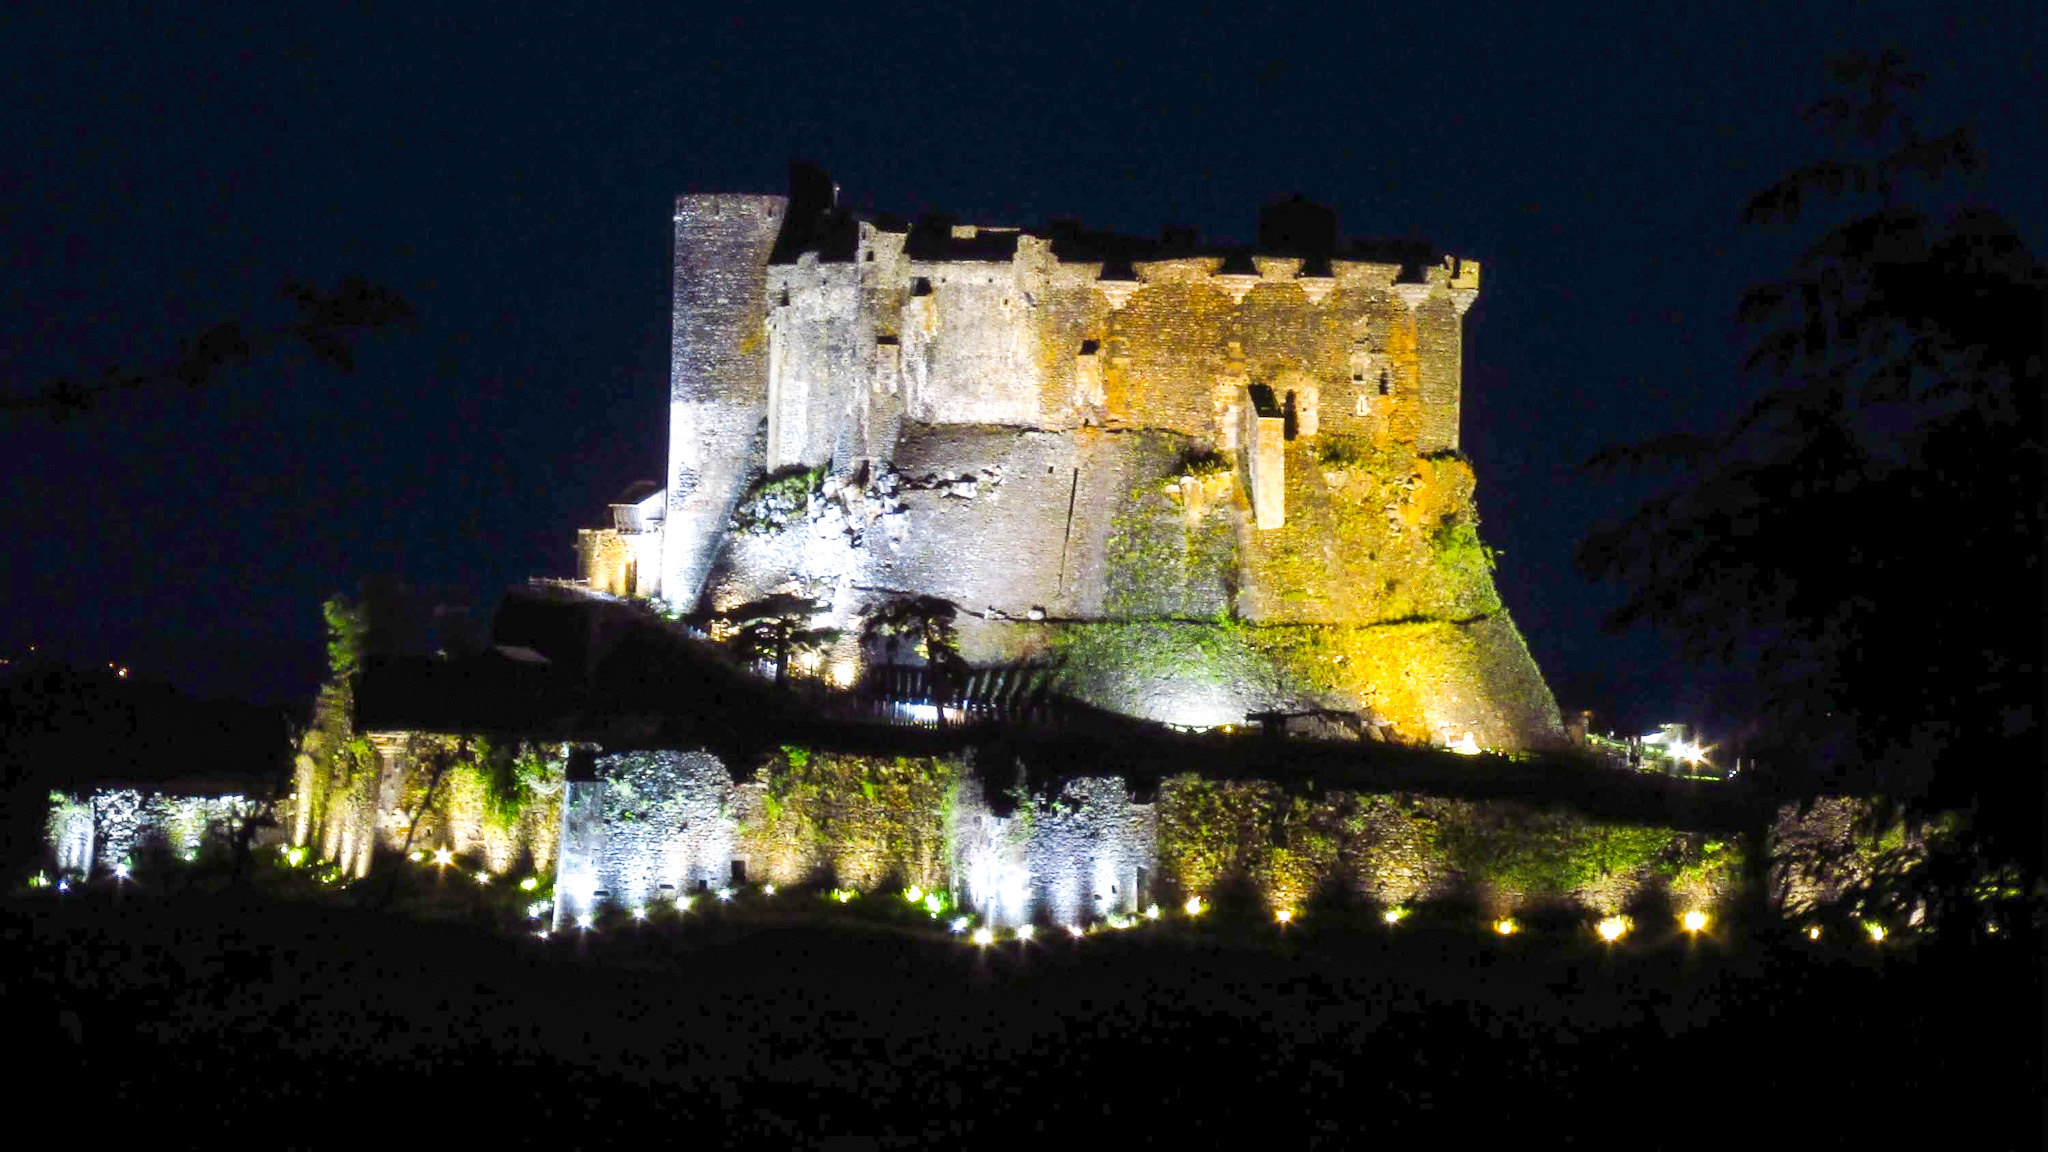 The Chateau de Murol illuminated at night